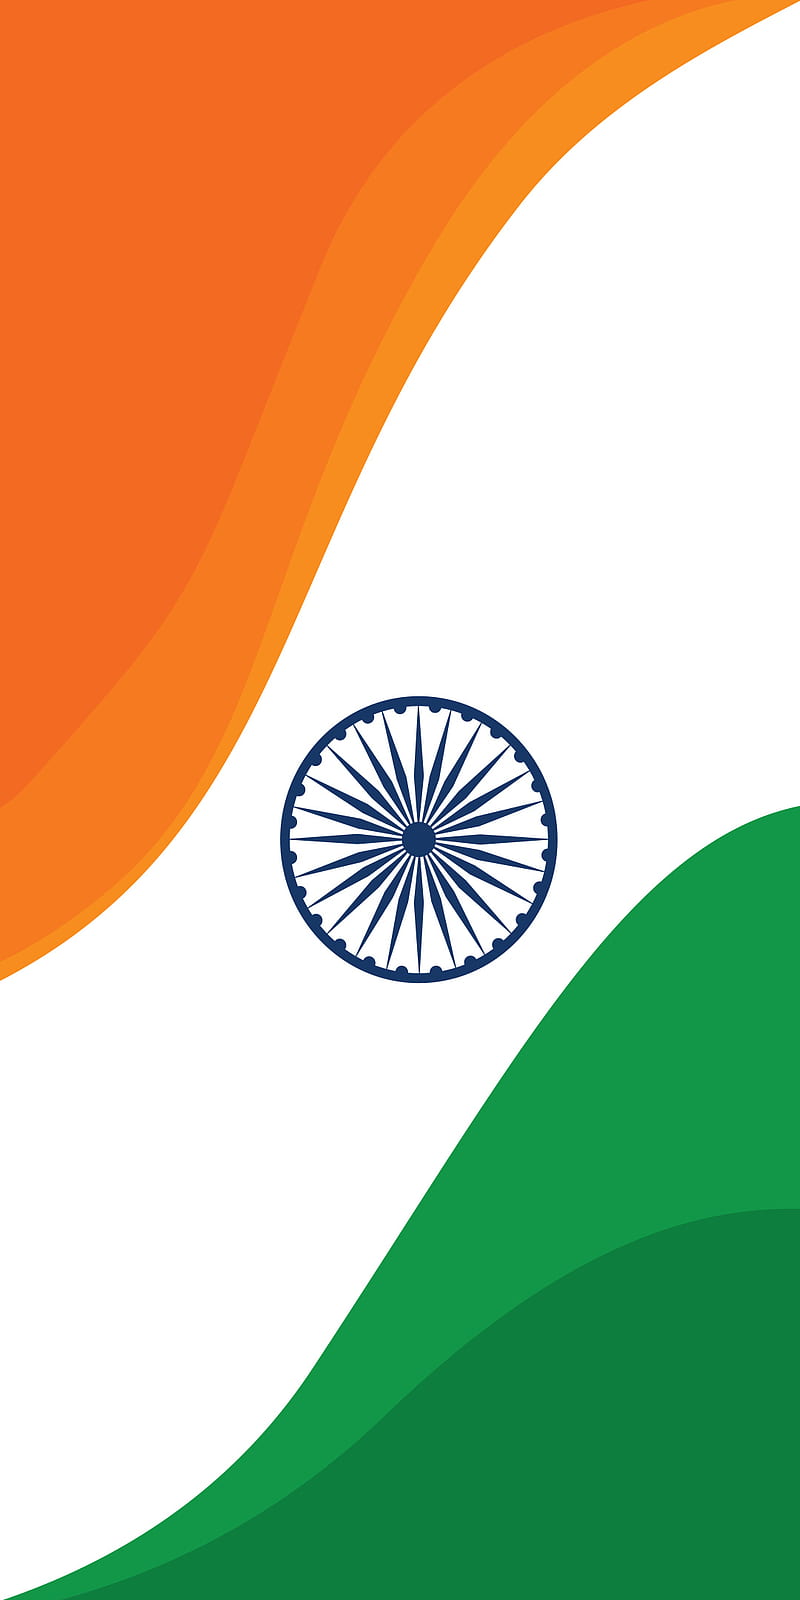 Orange Creative Indian Background Wallpaper Image For Free Download   Pngtree